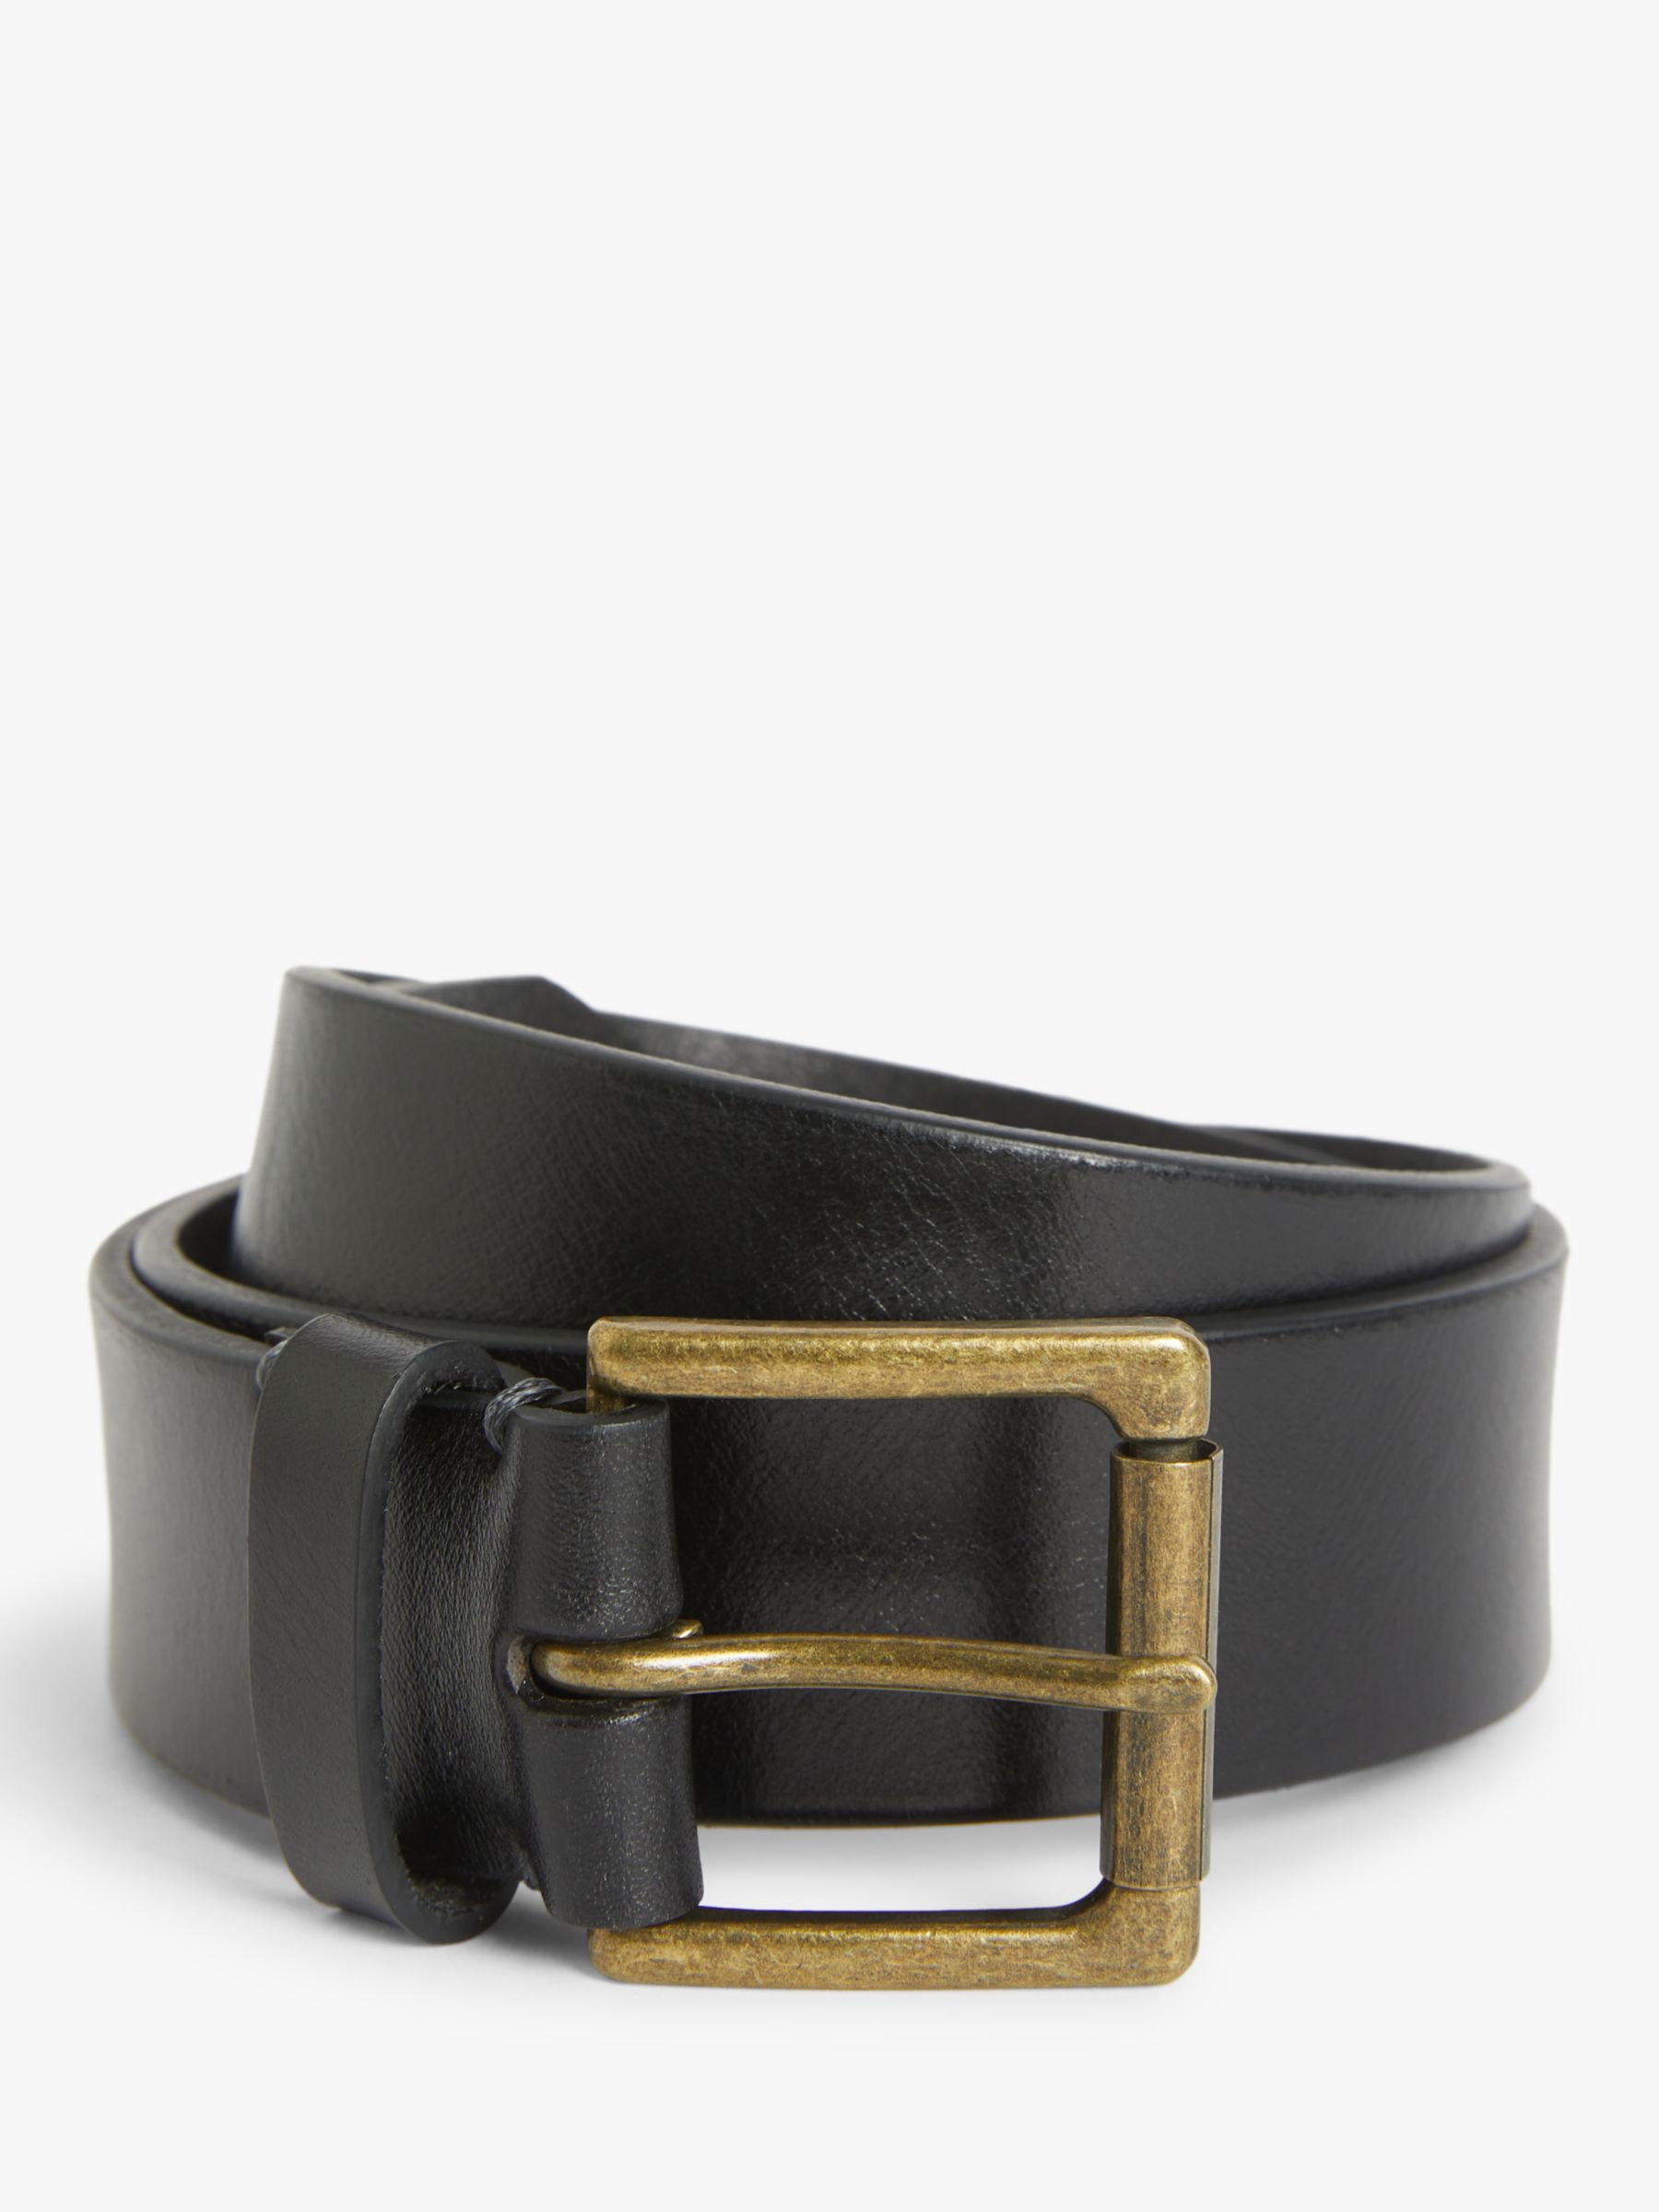 John Lewis Made in England 35mm Reversible Leather Belt, Black/Brown at  John Lewis & Partners